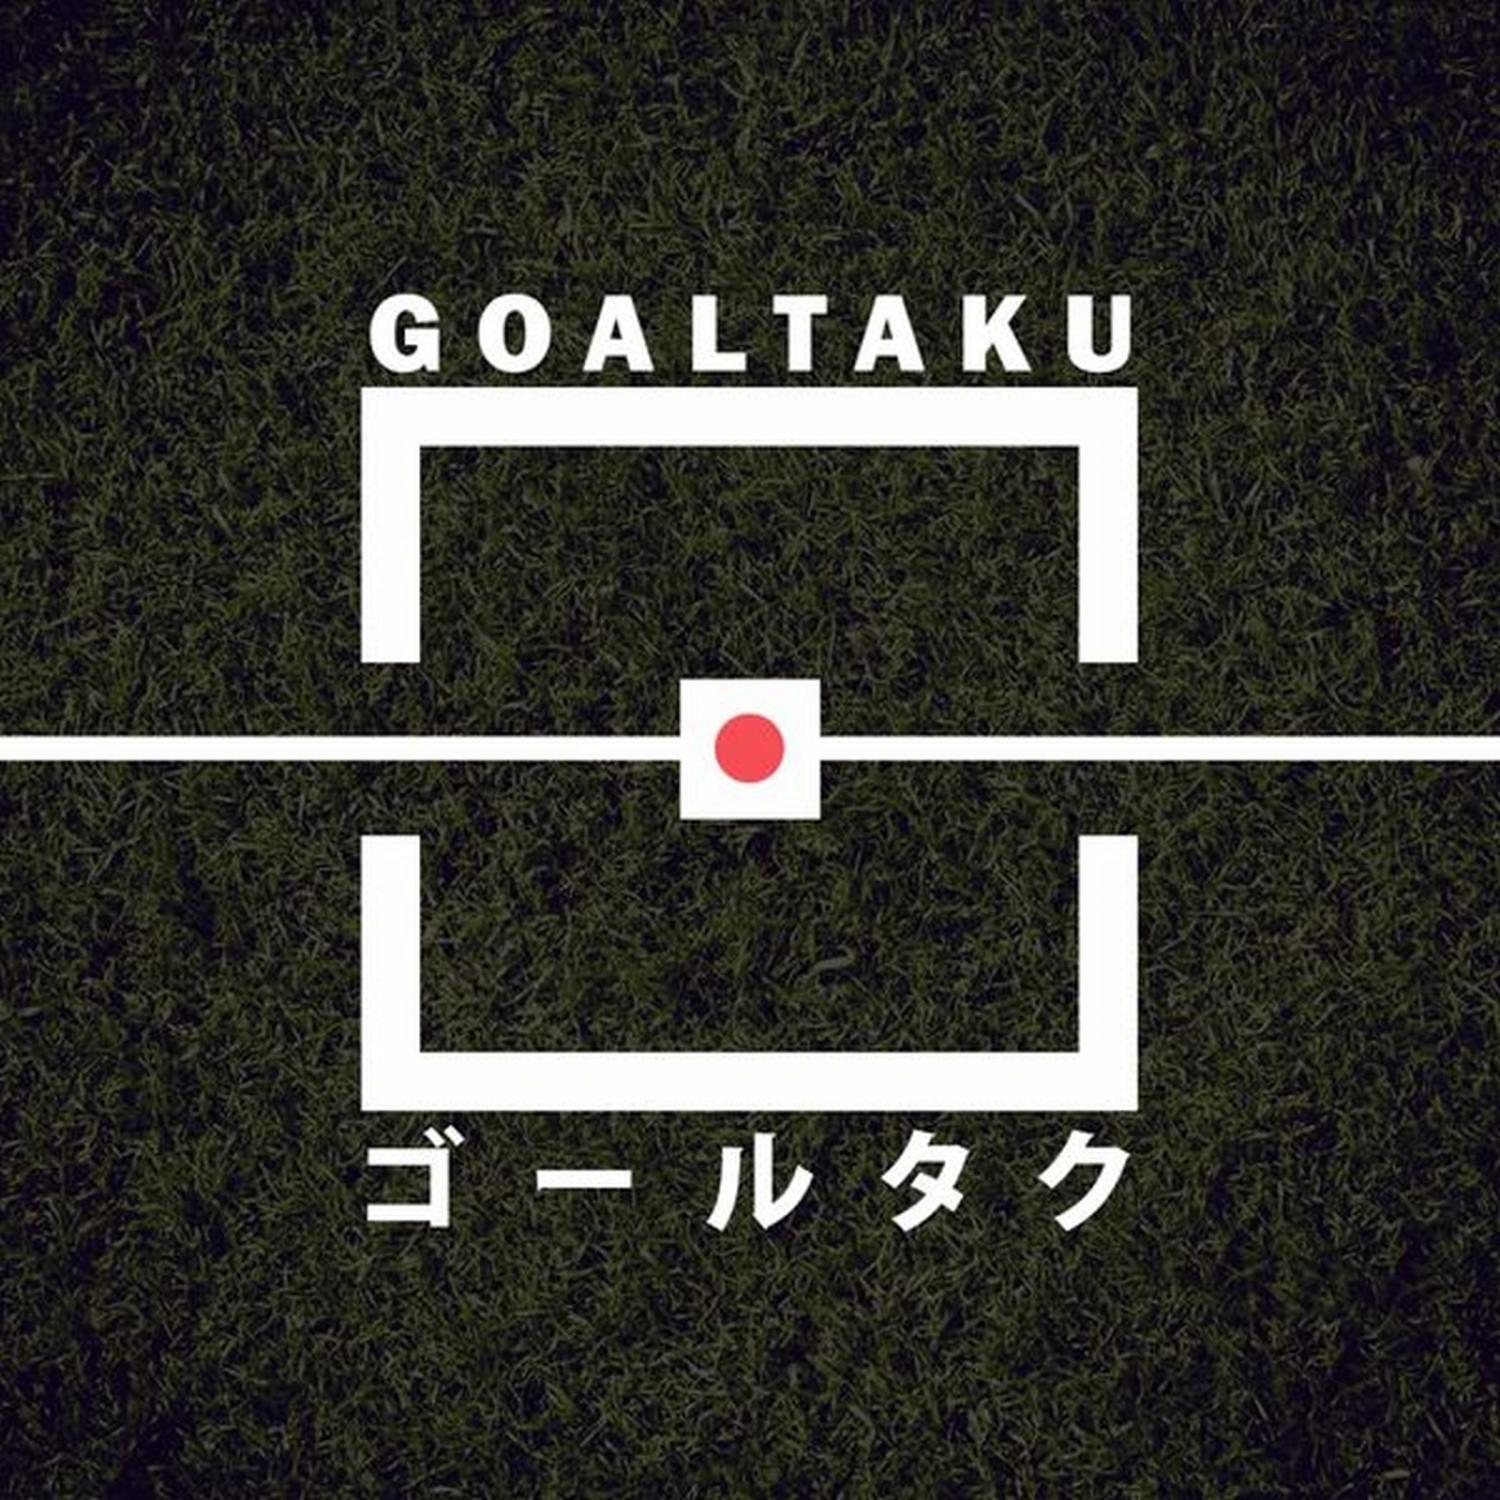 Goaltaku - Fußball in Japan